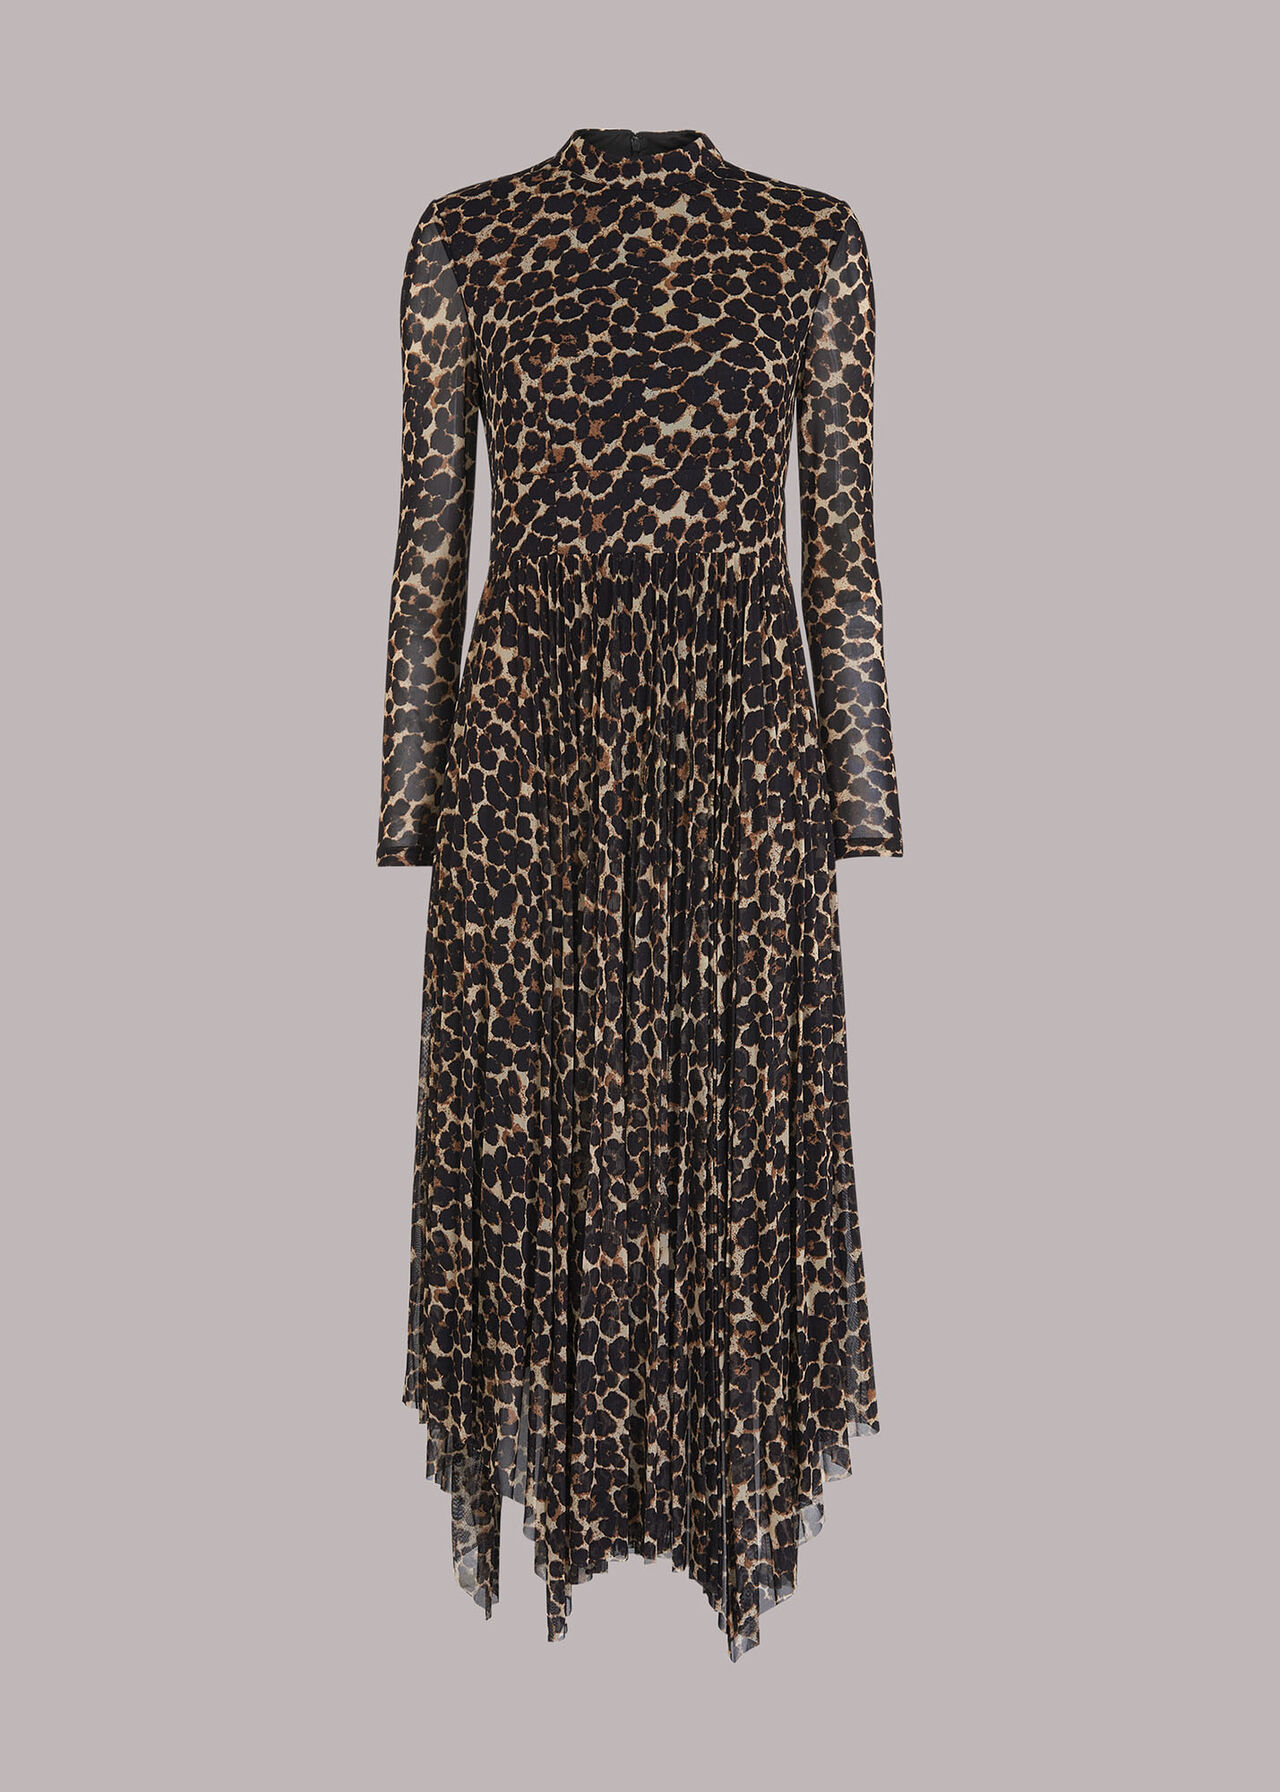 Leopard Print Smudge Animal Mesh Dress, WHISTLES